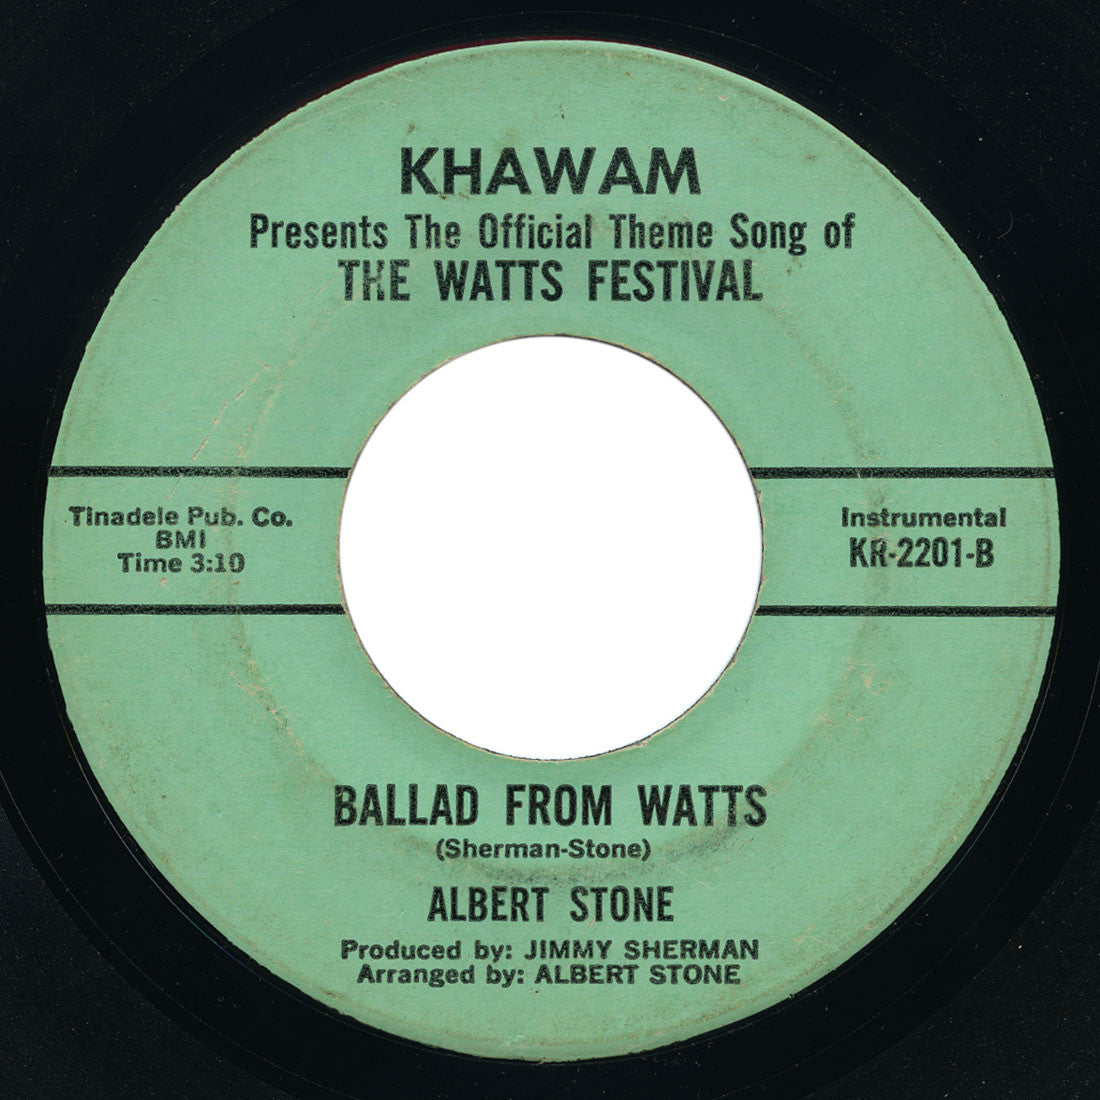 Albert Stone - Ballad From Watts / instrumental version - Khawam